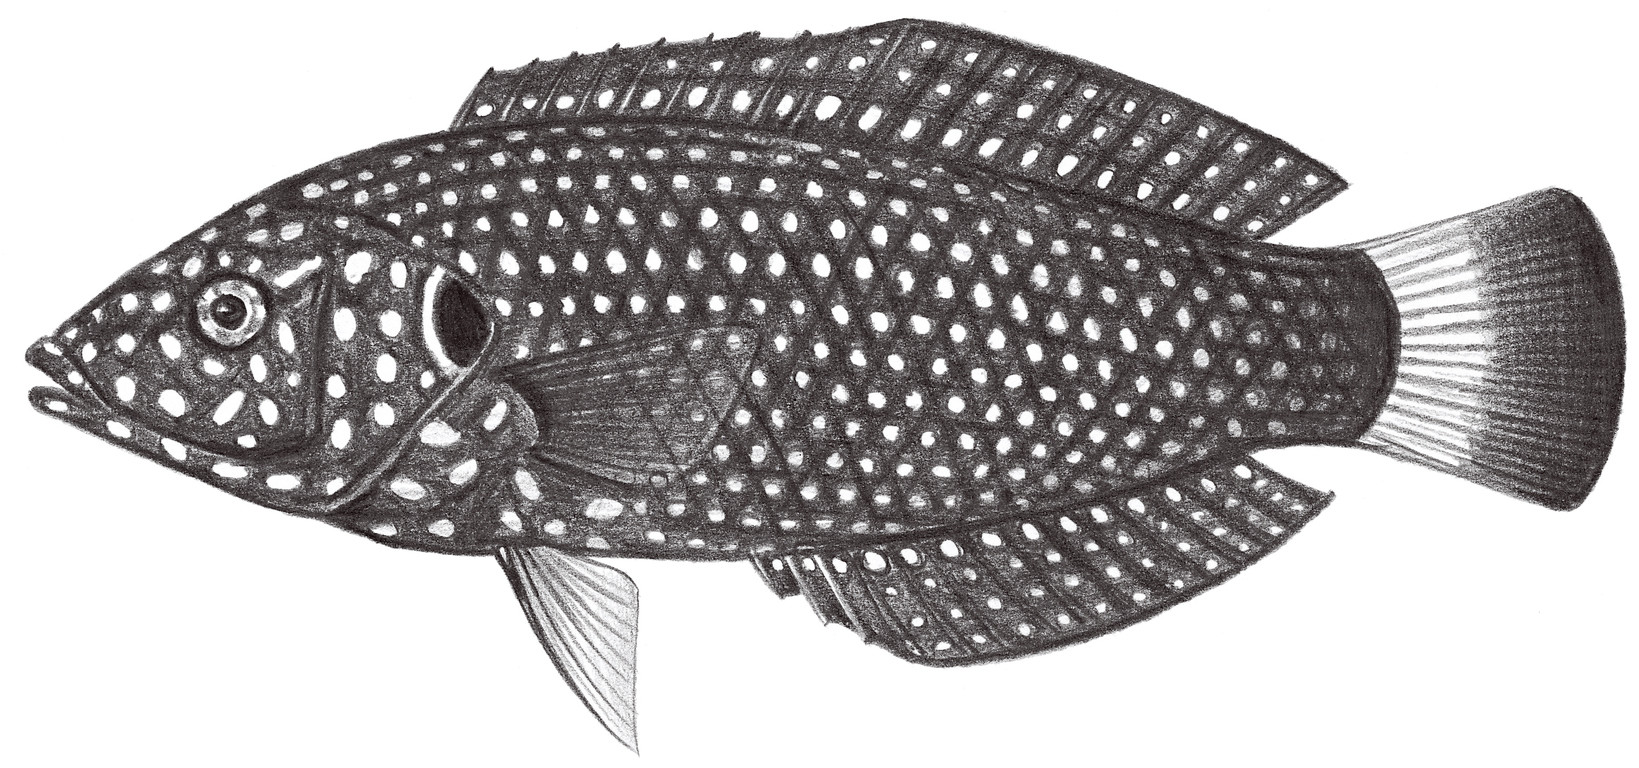 1722.	黑尾阿南魚 Anampses melanurus Bleeker, 1857